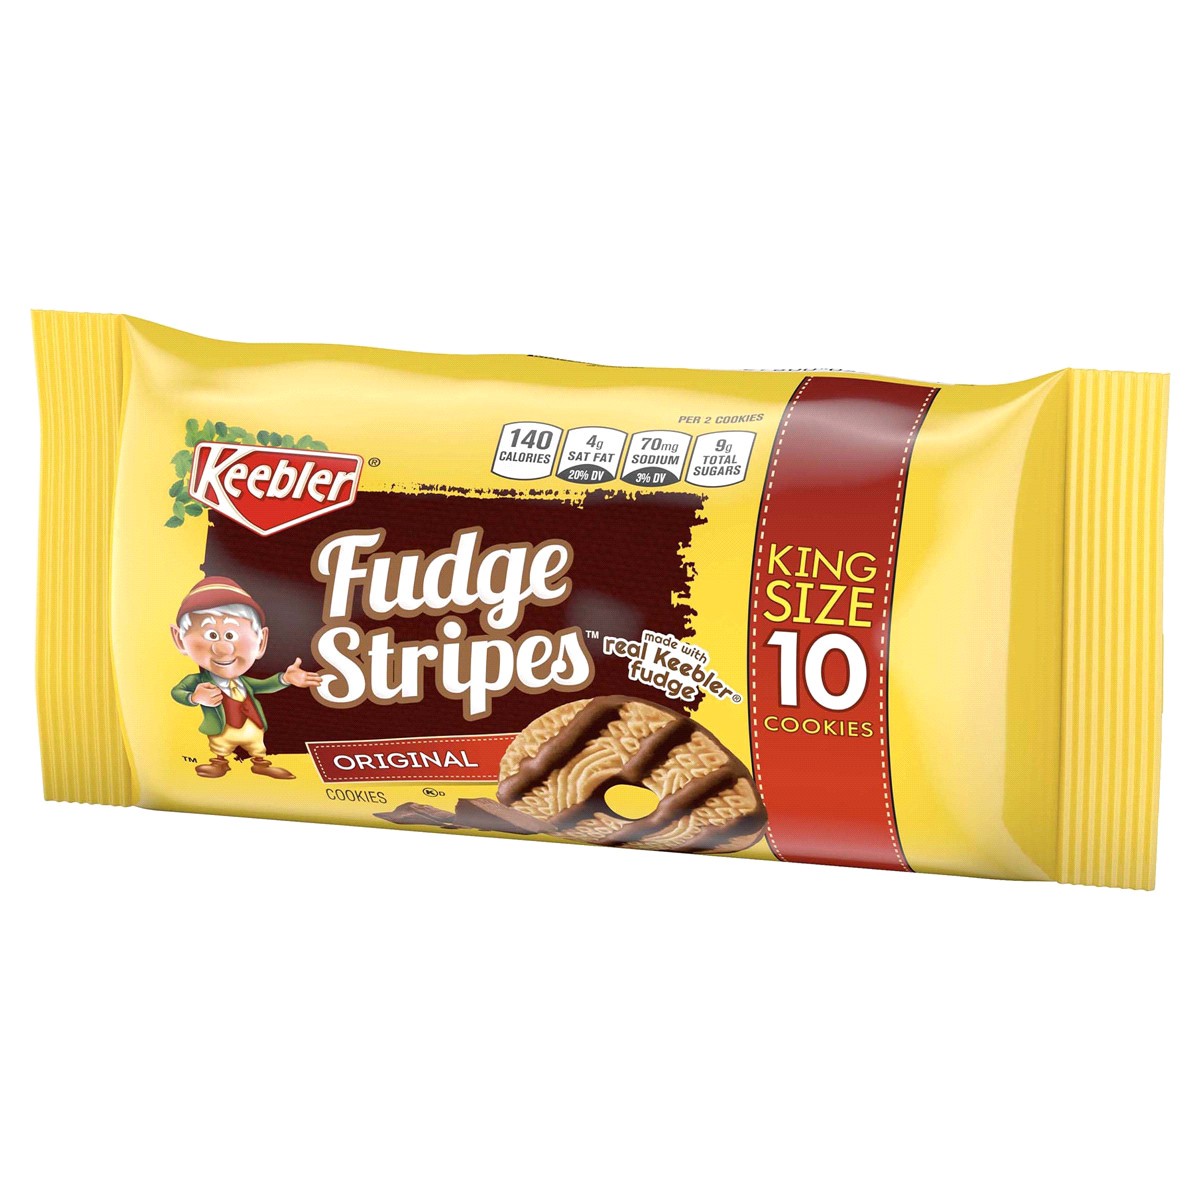 slide 20 of 29, Keeber Fudge Stripes Original King Size Cookies 10Ct, 4.75 oz